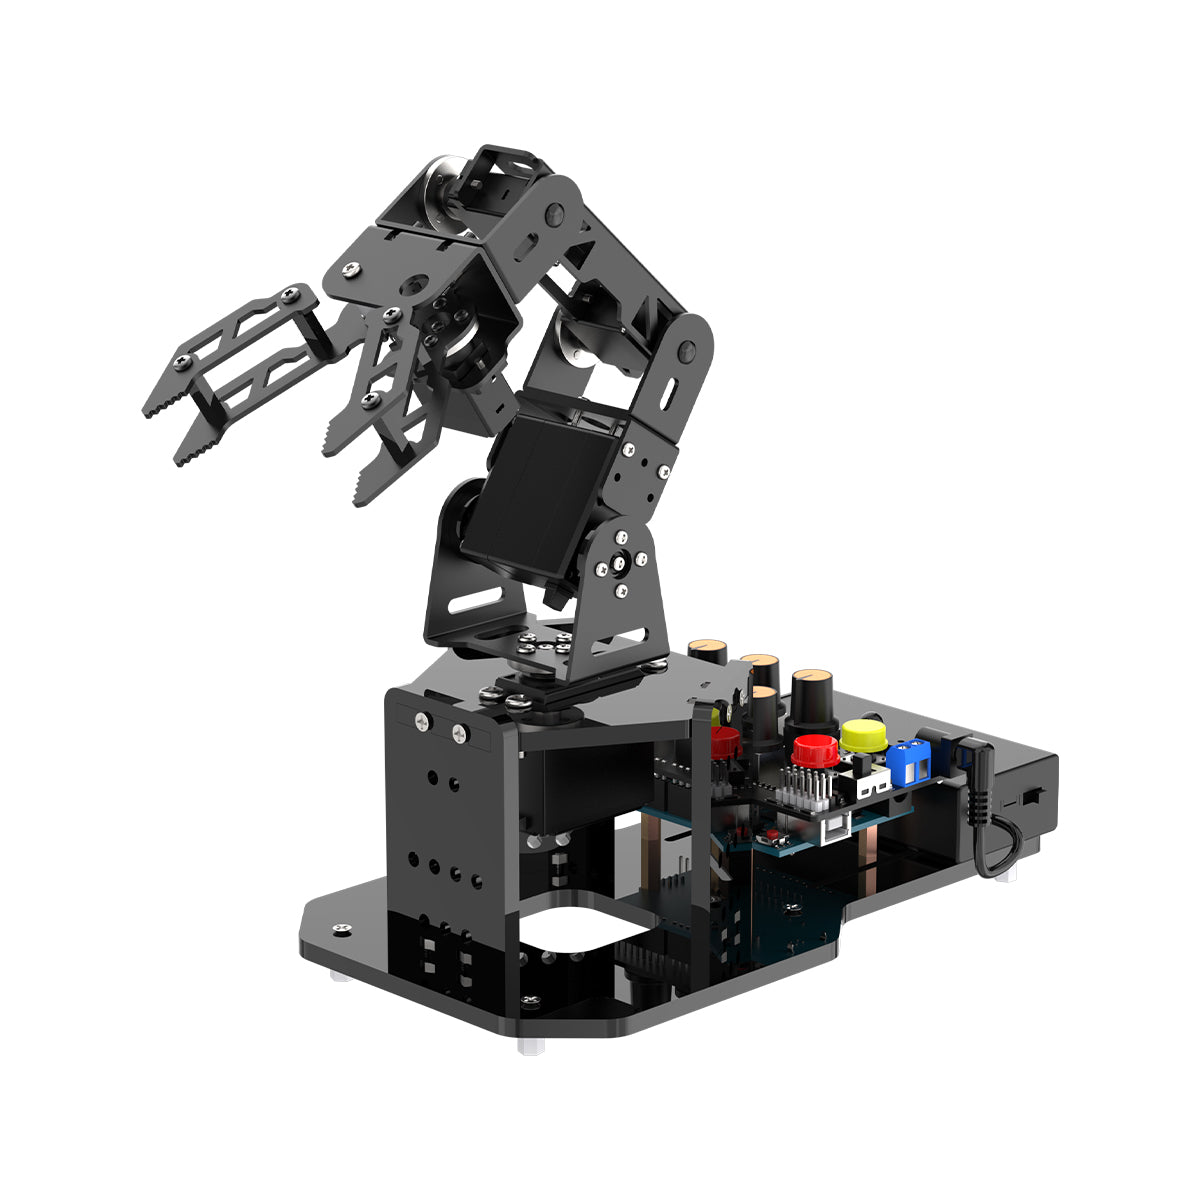 miniArm Open Source AI Robotic Arm Support Sensor Expansion, Arduino Programming